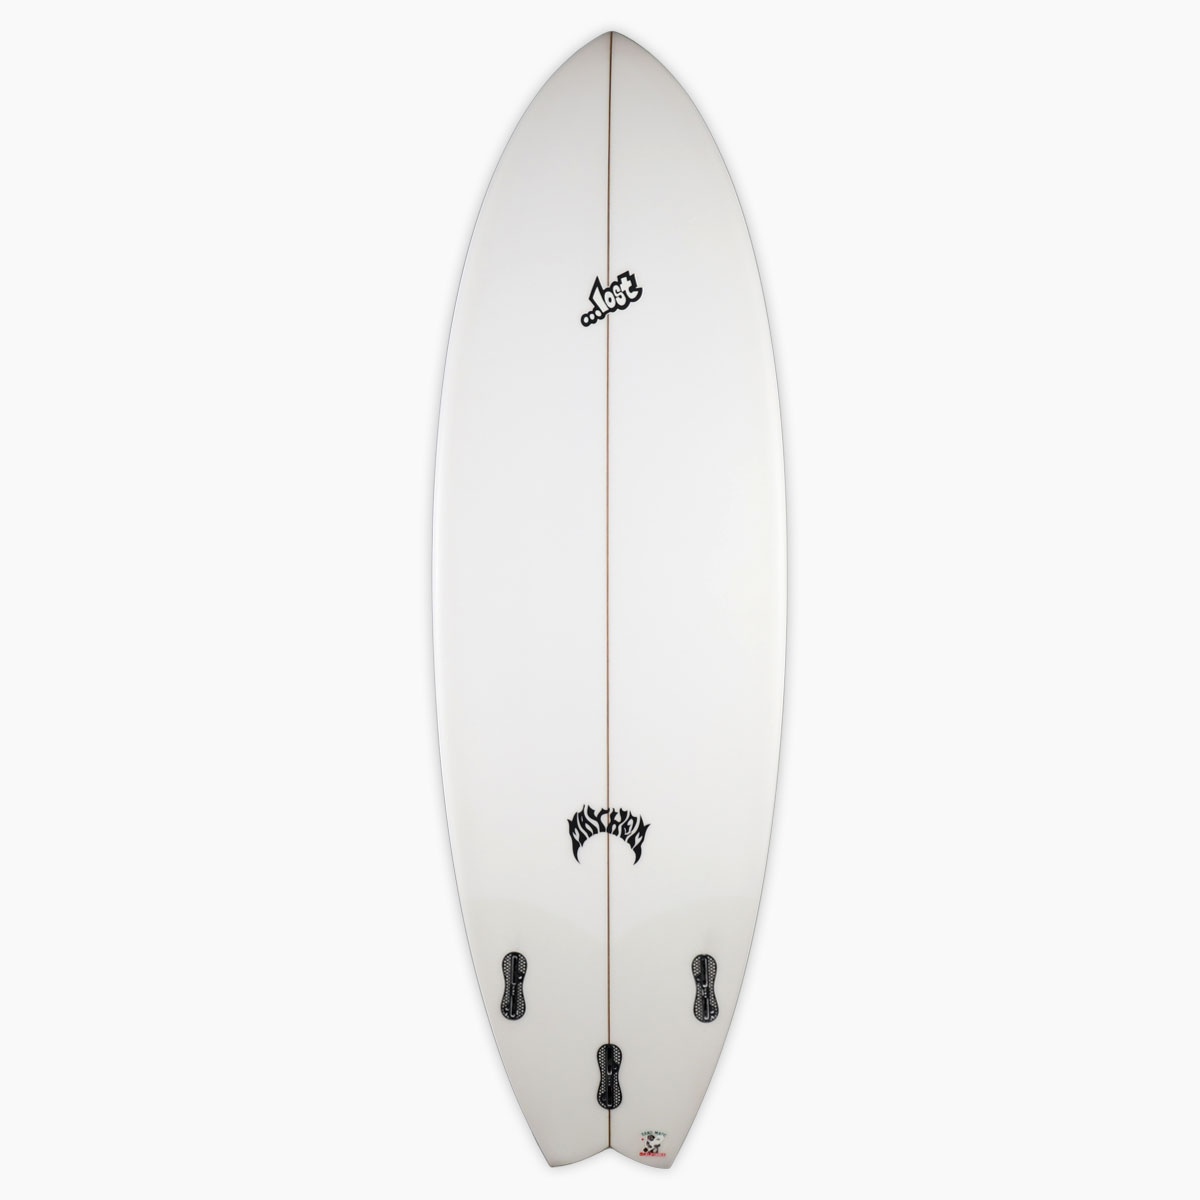 SurfBoardNet / ブランド:LOST SURFBOARDS モデル:RNF '96 CLEAR 